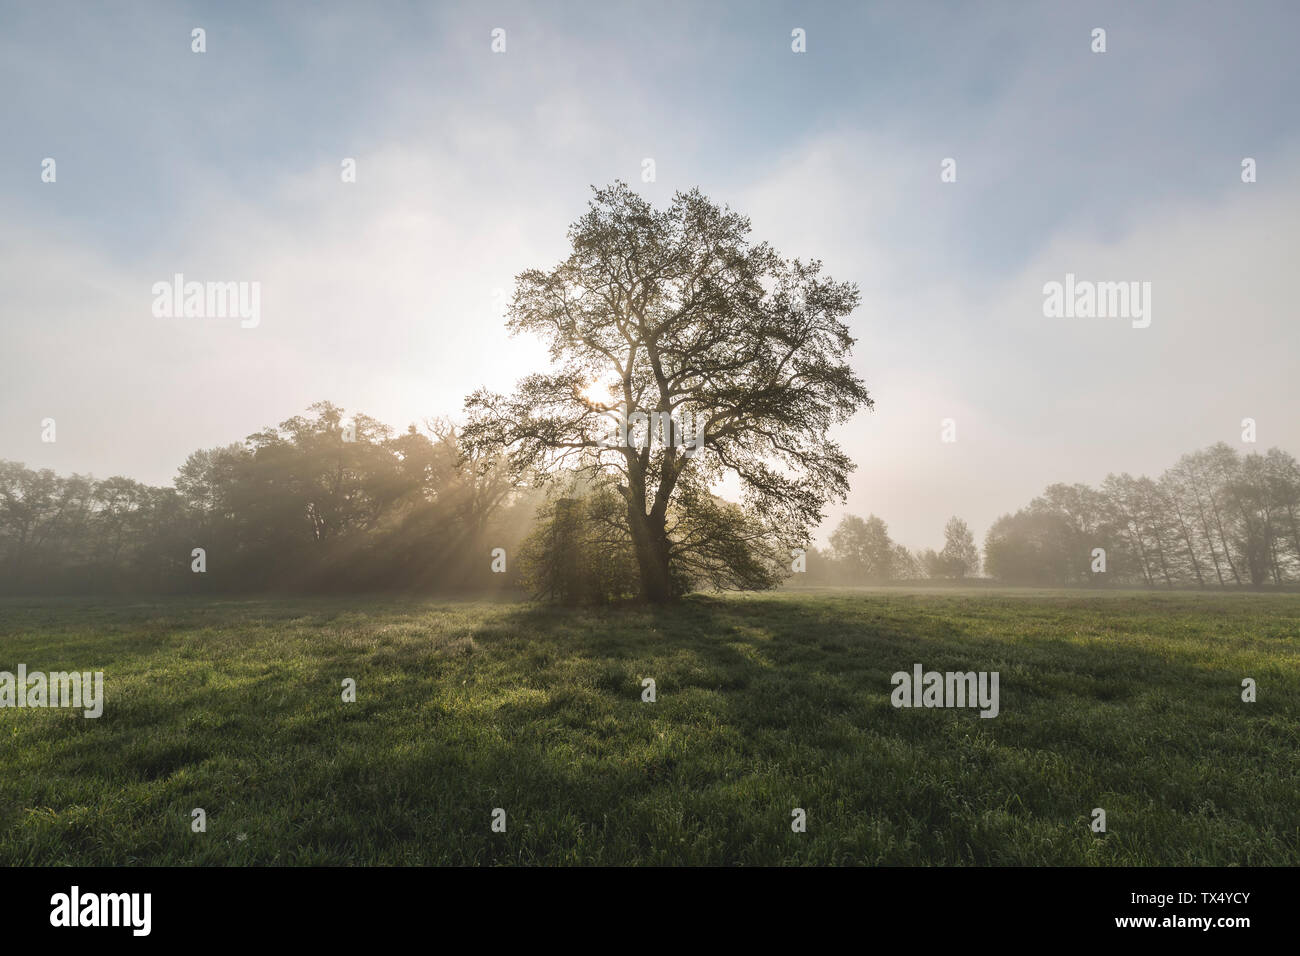 Germany, Brandenburg, single tree on a meadow at backlight Stock Photo